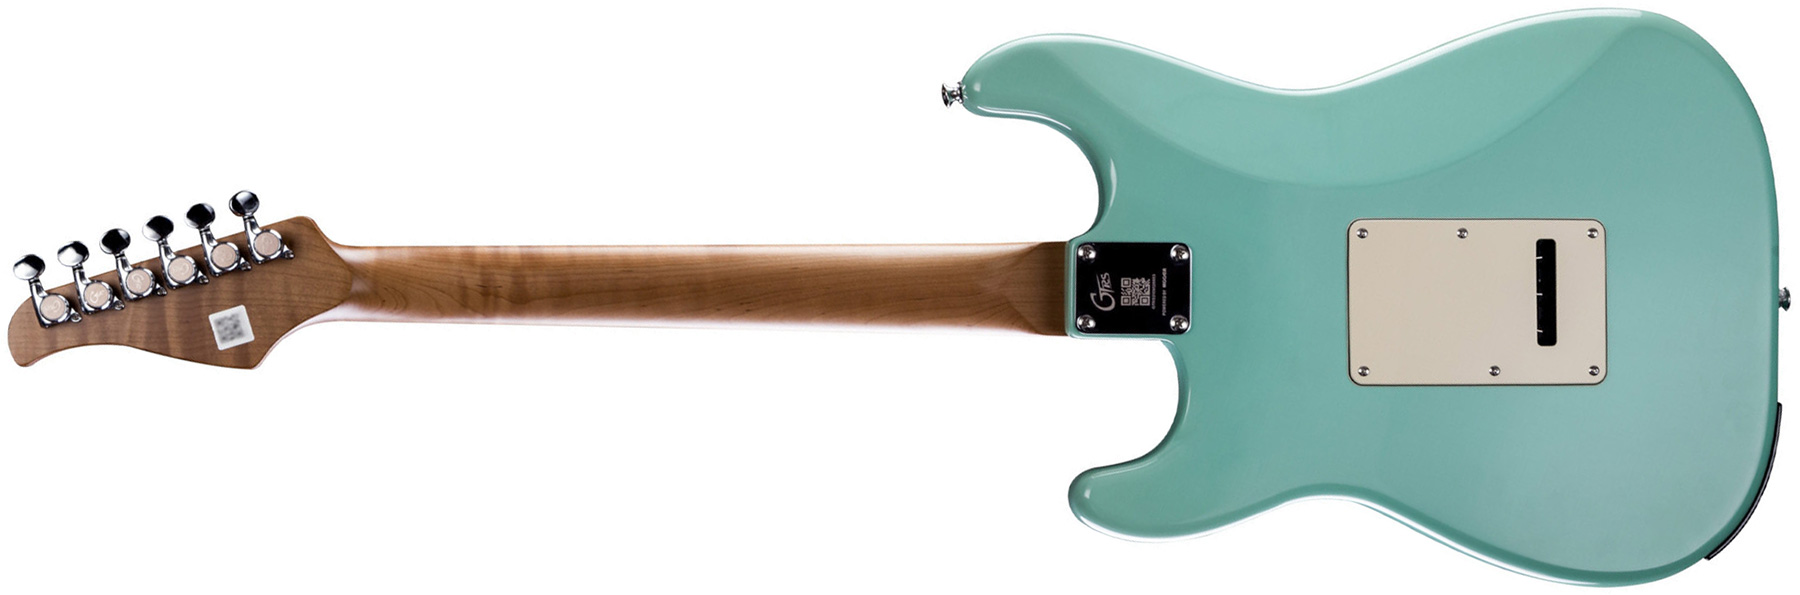 Mooer Gtrs P800 Pro Intelligent Guitar Hss Trem Rw - Mint Green - Midi-/Digital-/Modeling Gitarren - Variation 1